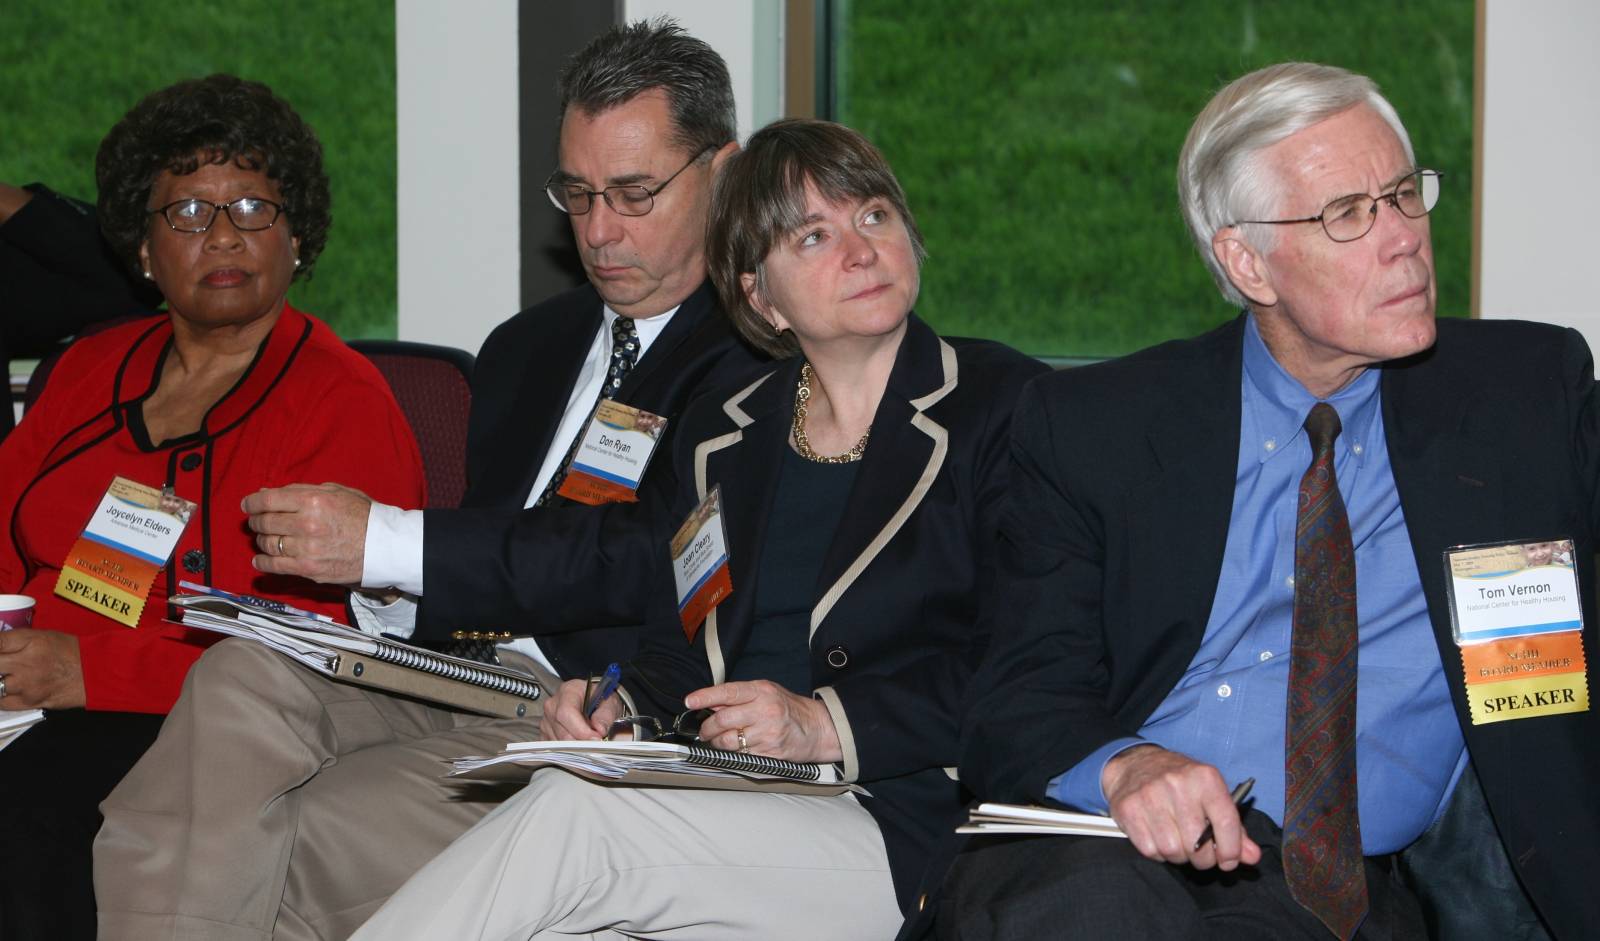 Dr. Joycelyn Elders, Don Ryan, Joan Cleary, and Tom Vernon